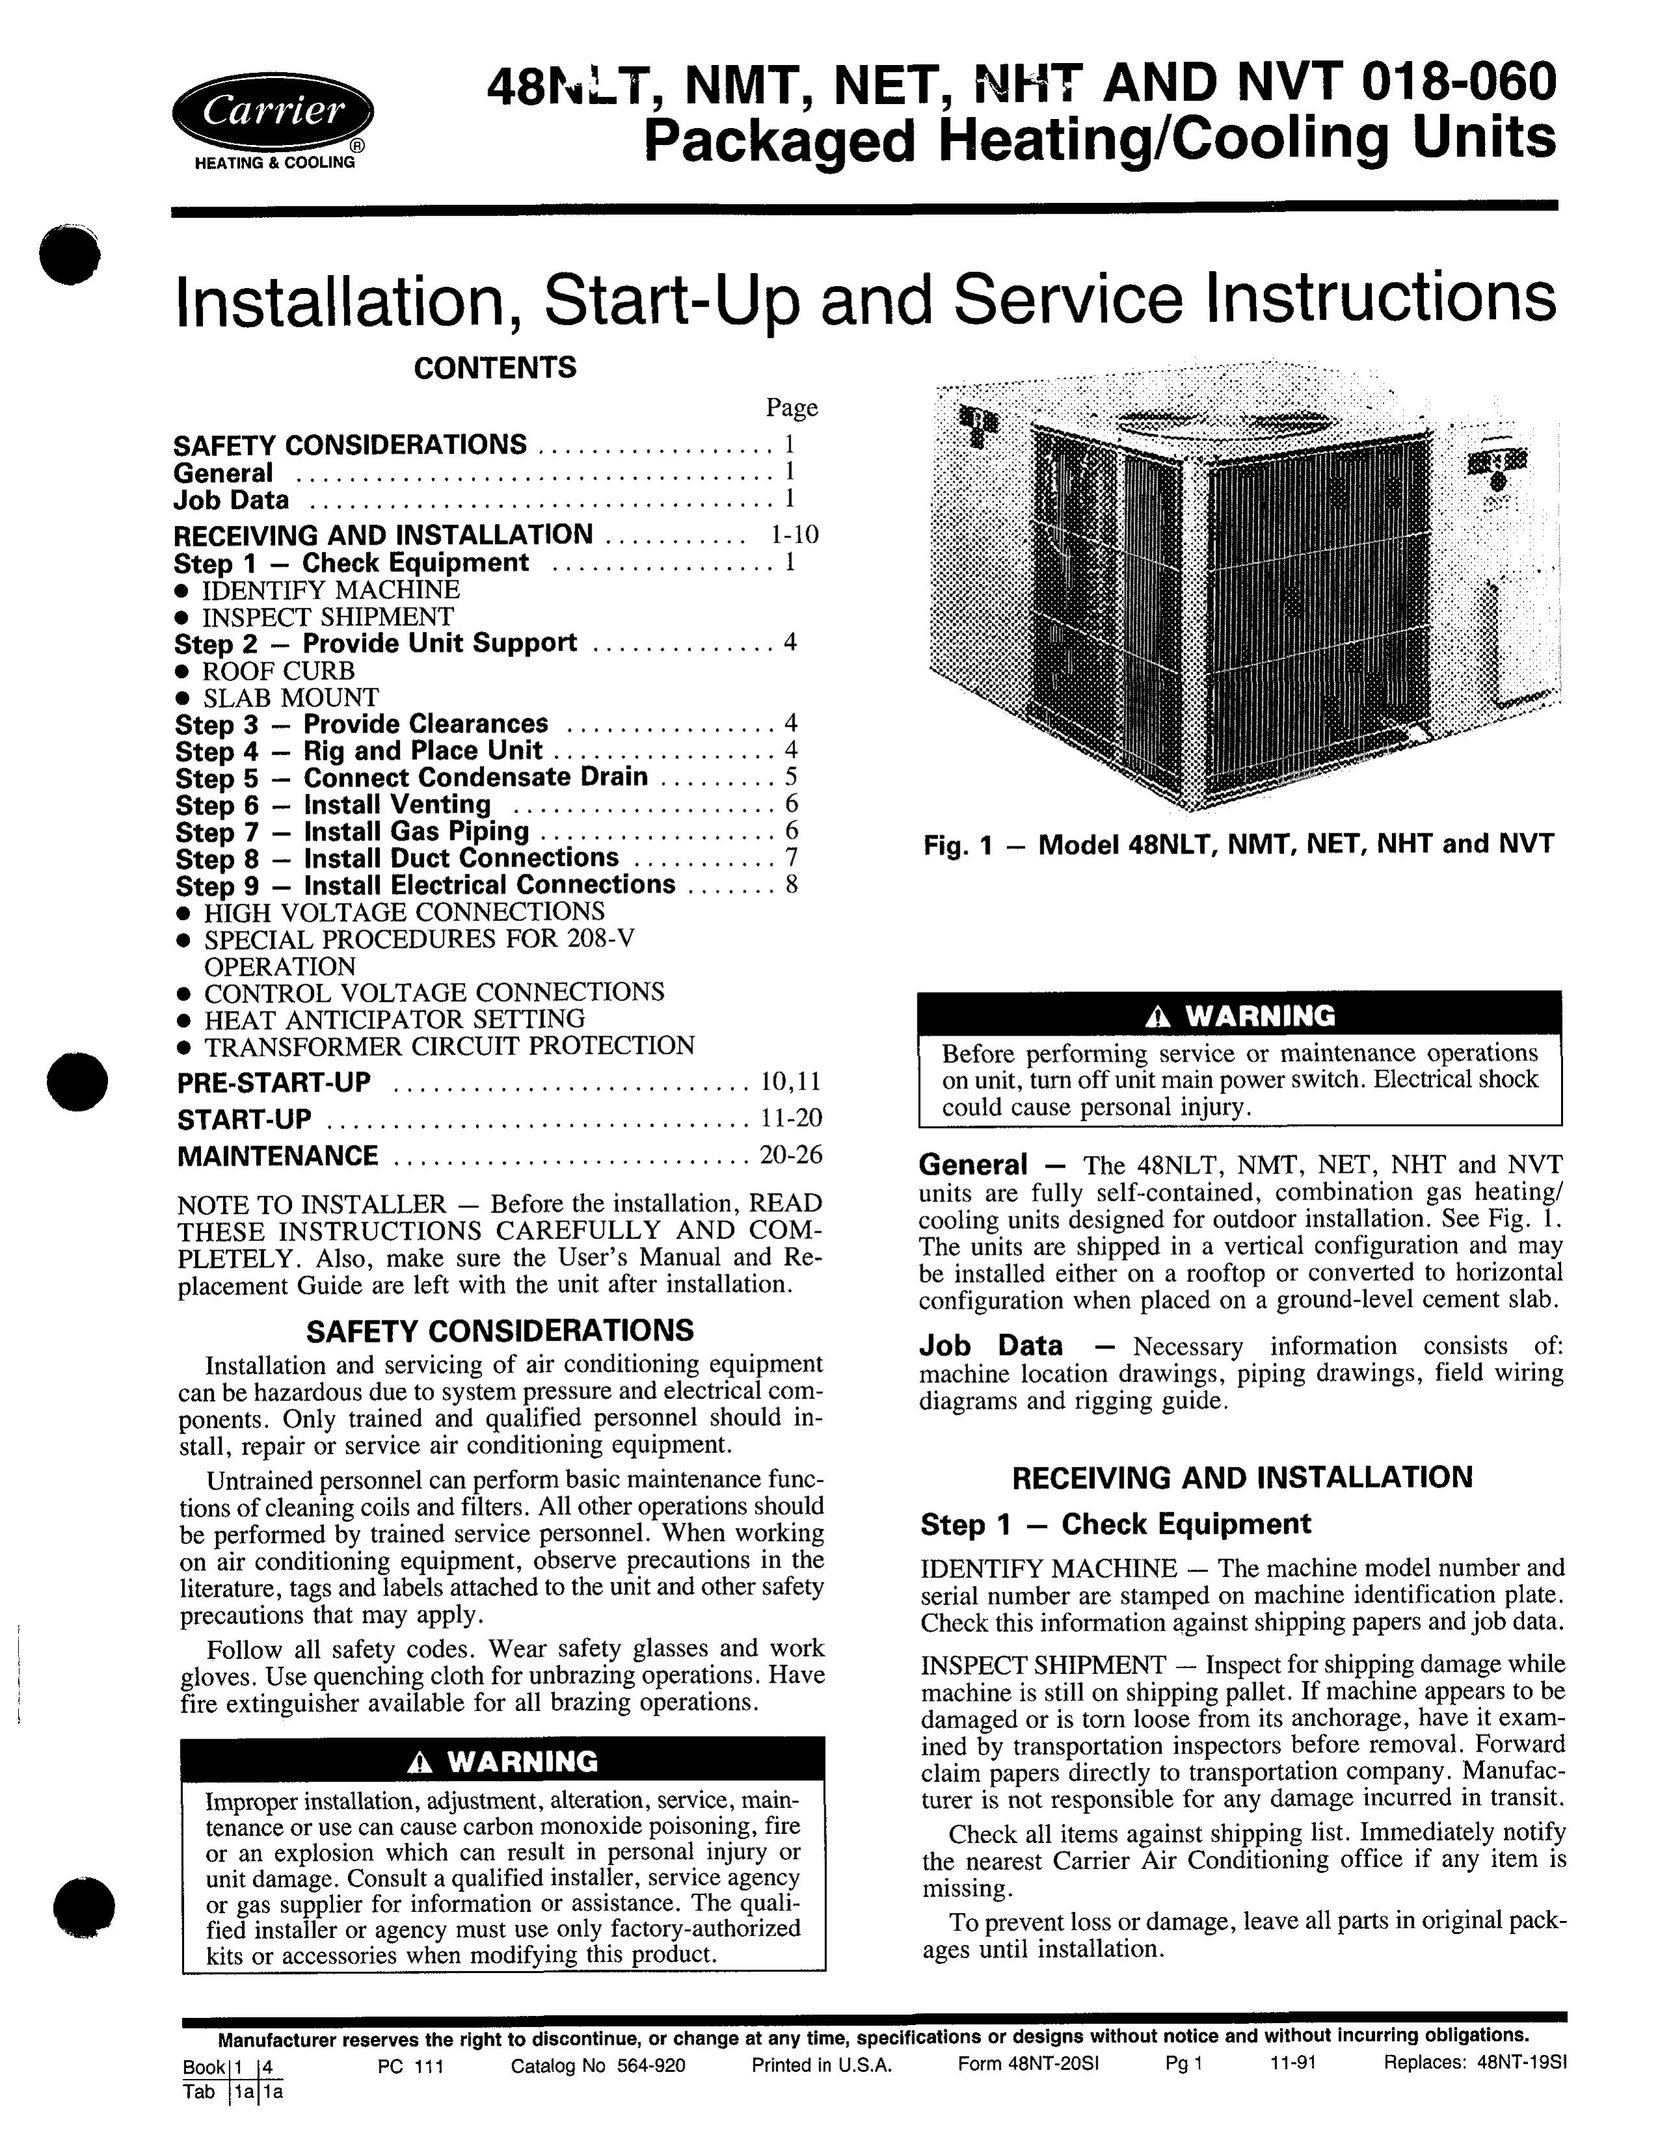 Carrier 48NVT Heating System User Manual